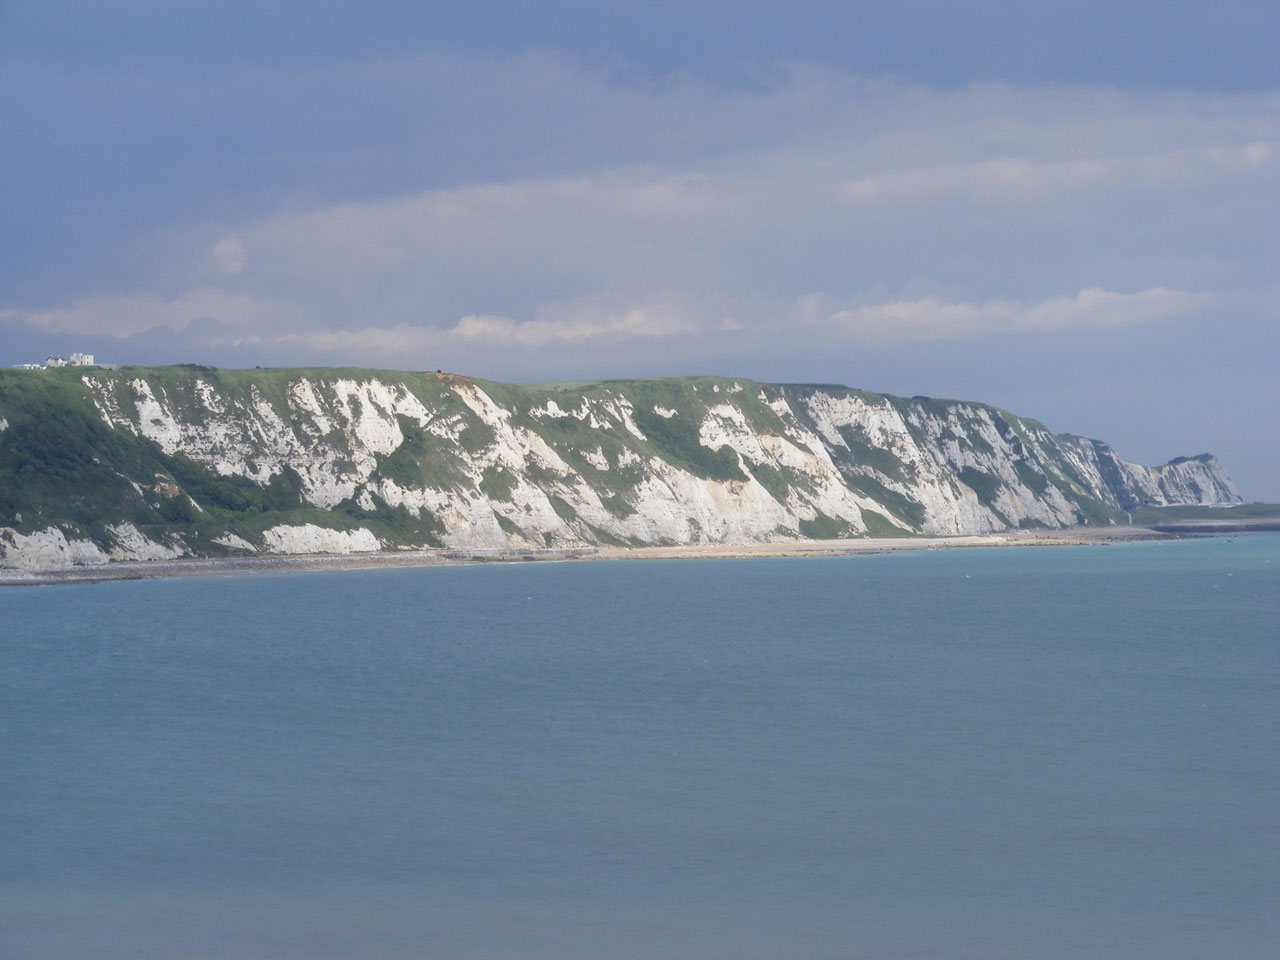 The White Cliffs de Dover